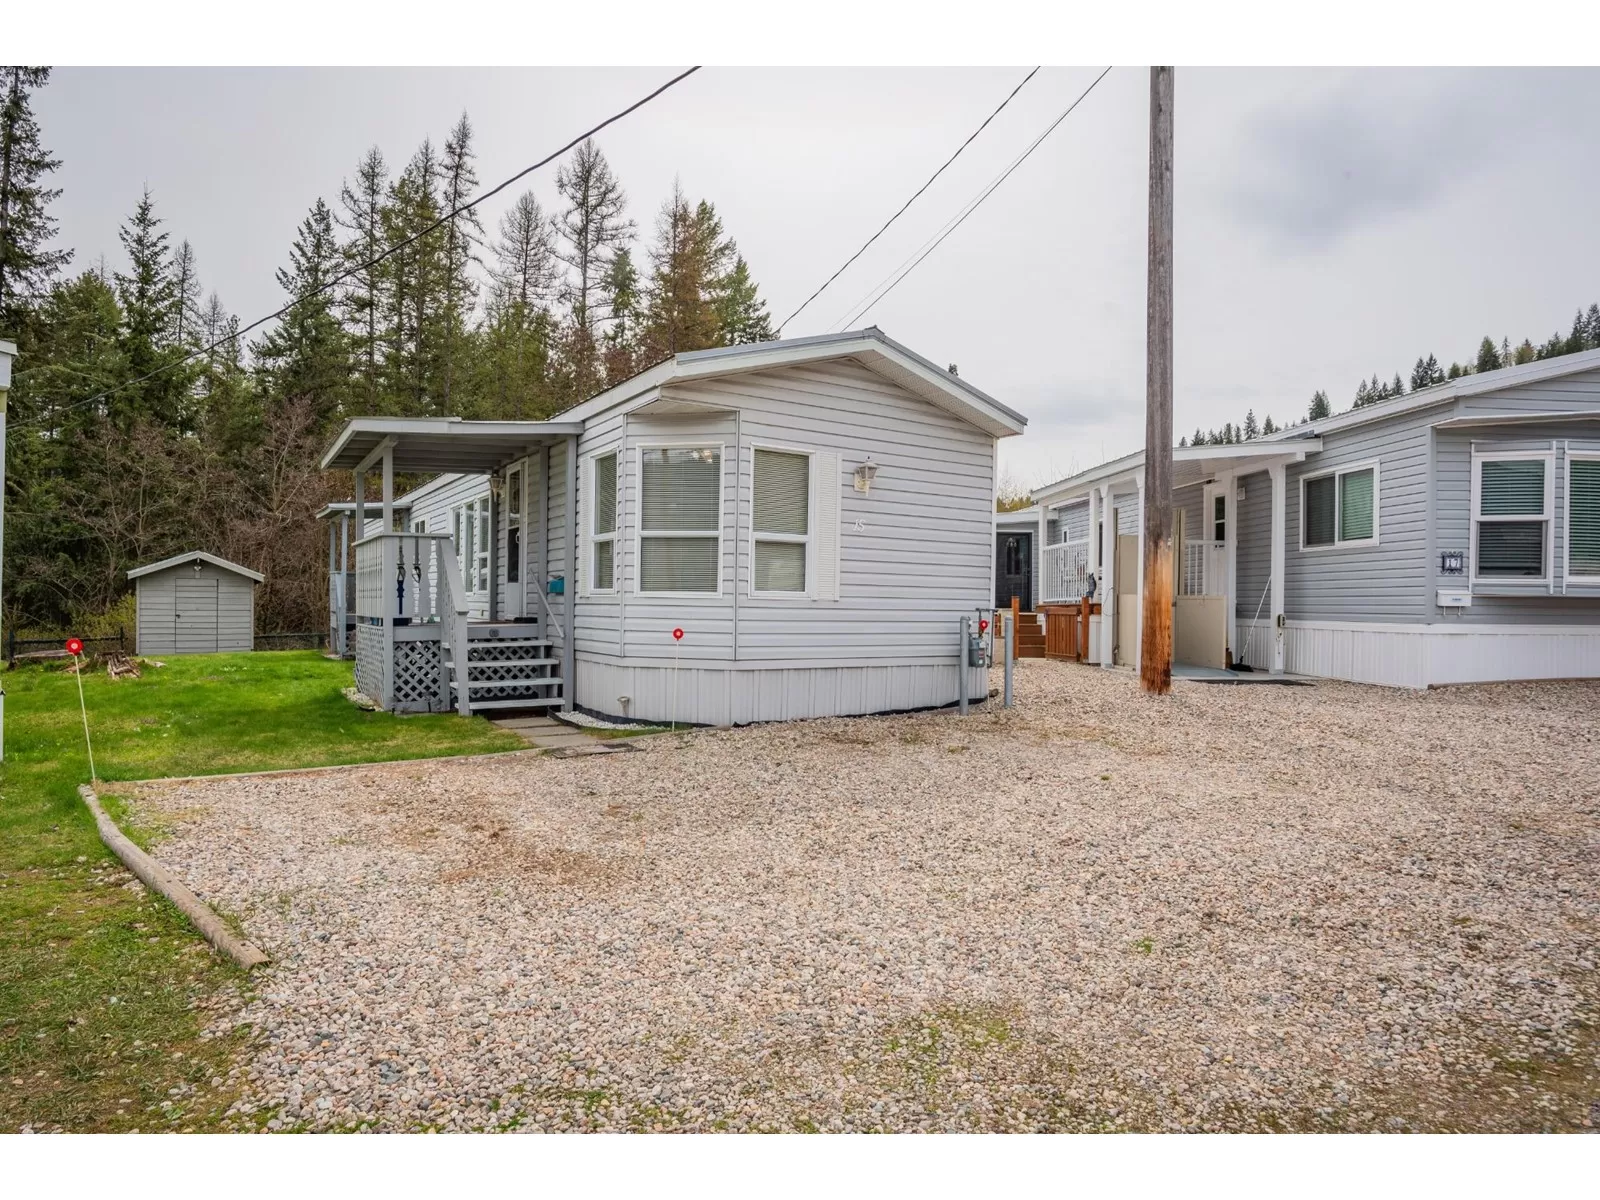 Mobile Home for rent: 15 - 1601 Columbia Avenue, Castlegar, British Columbia V1N 1J1